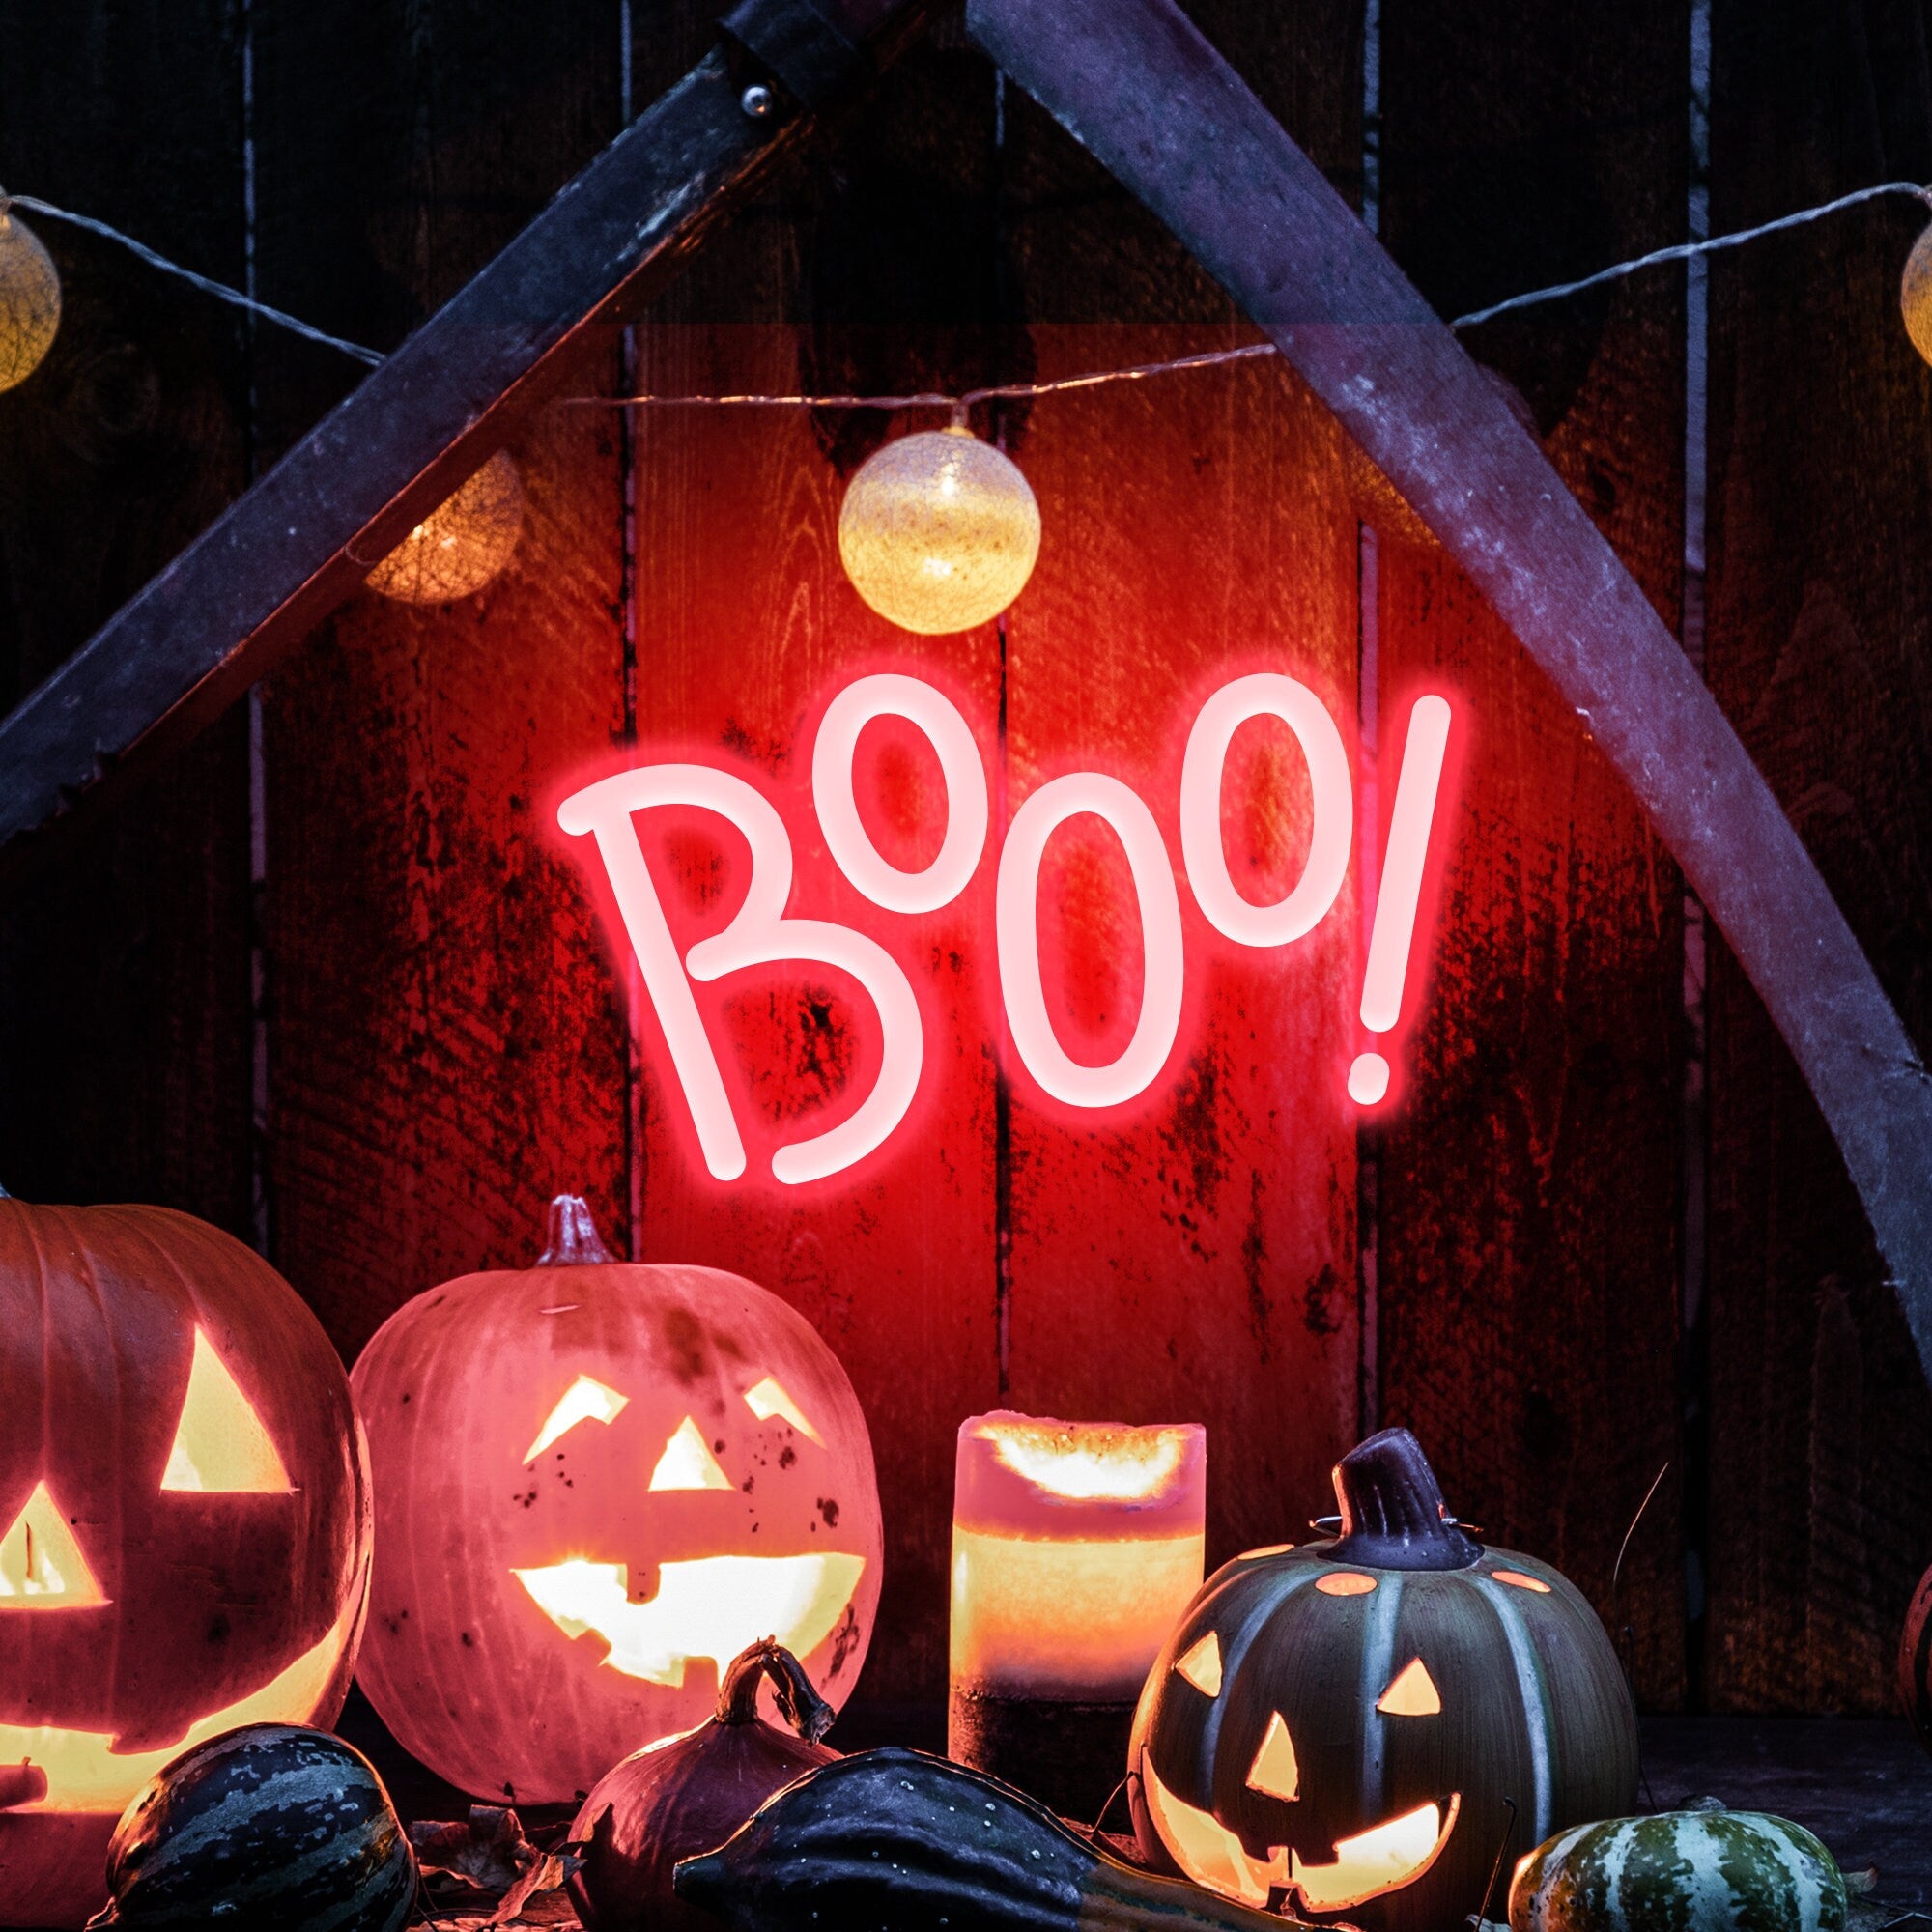 NEONIP-100% Handmade Halloween Neon Sign, Boo!